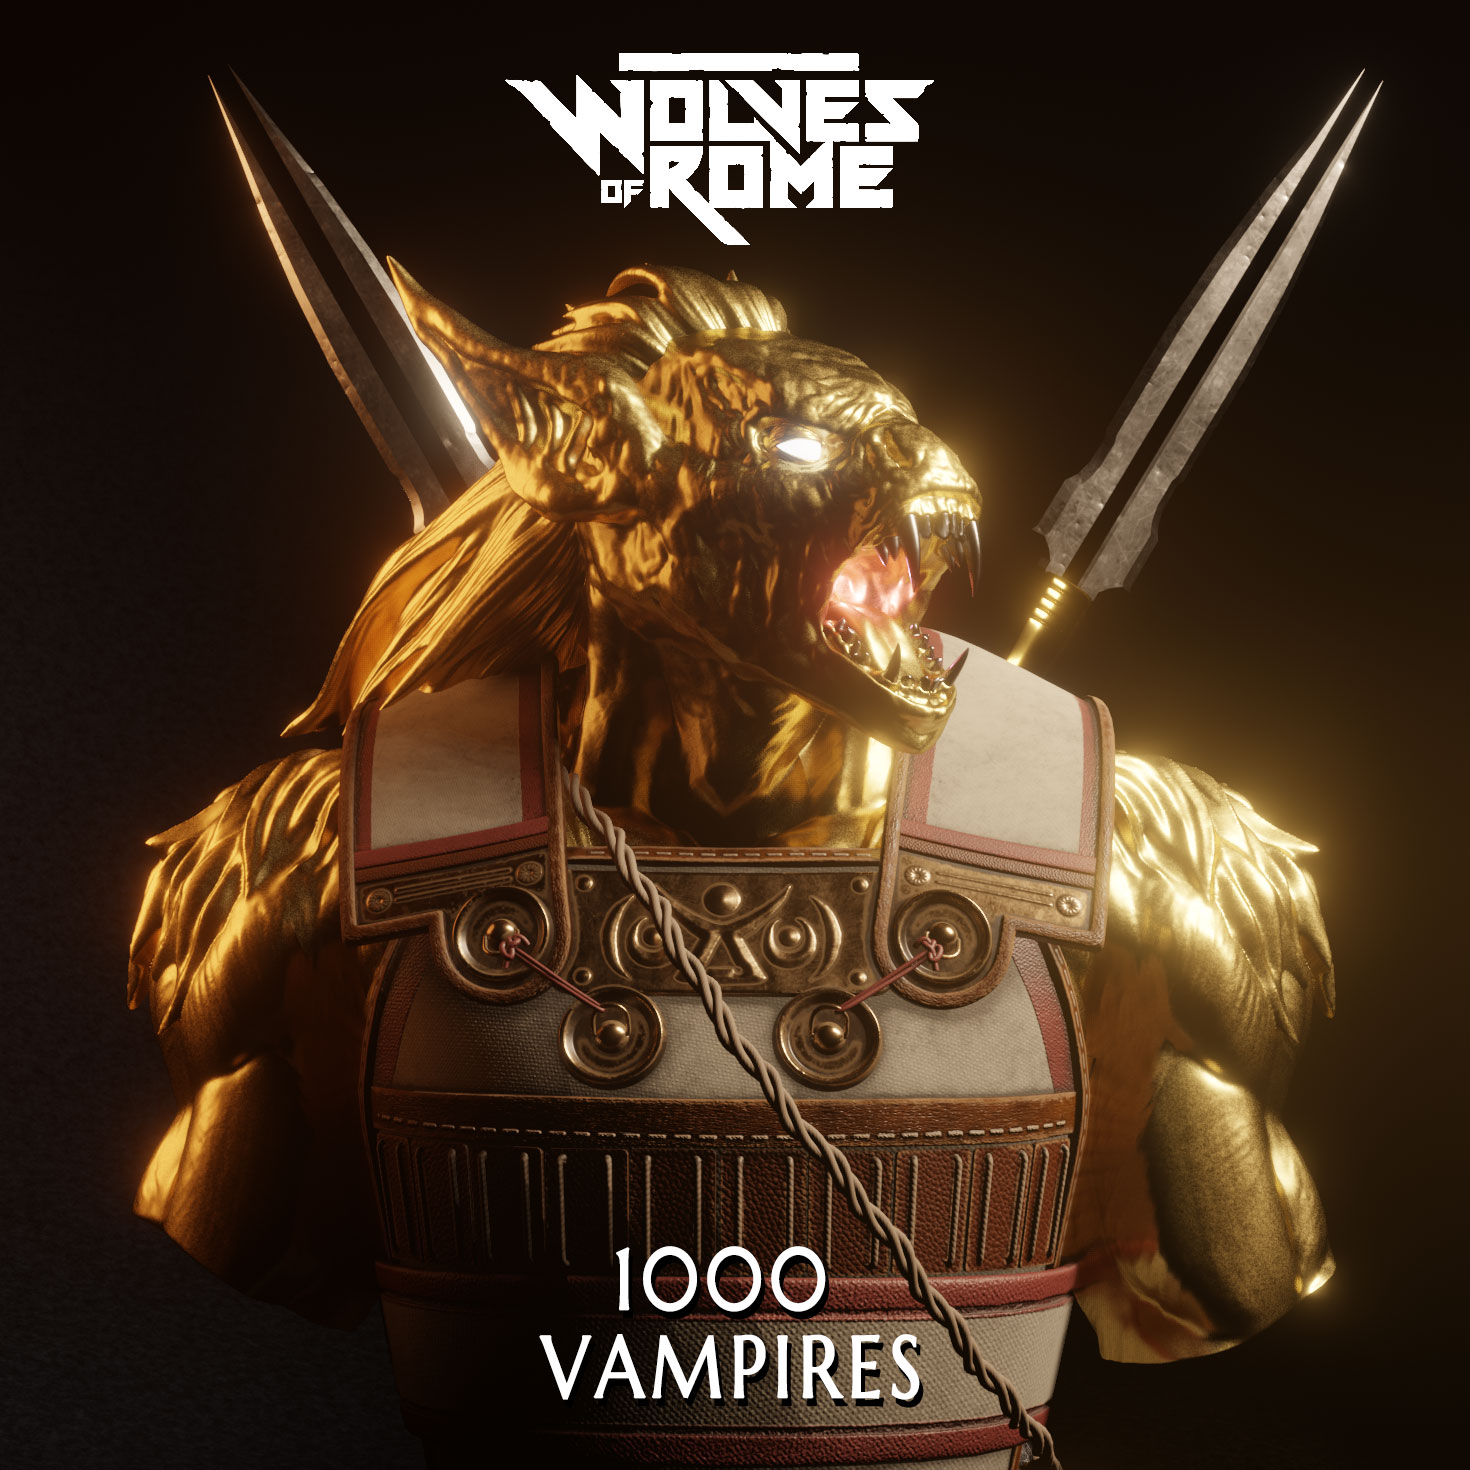 Wolves of Rome - Empire Vampires